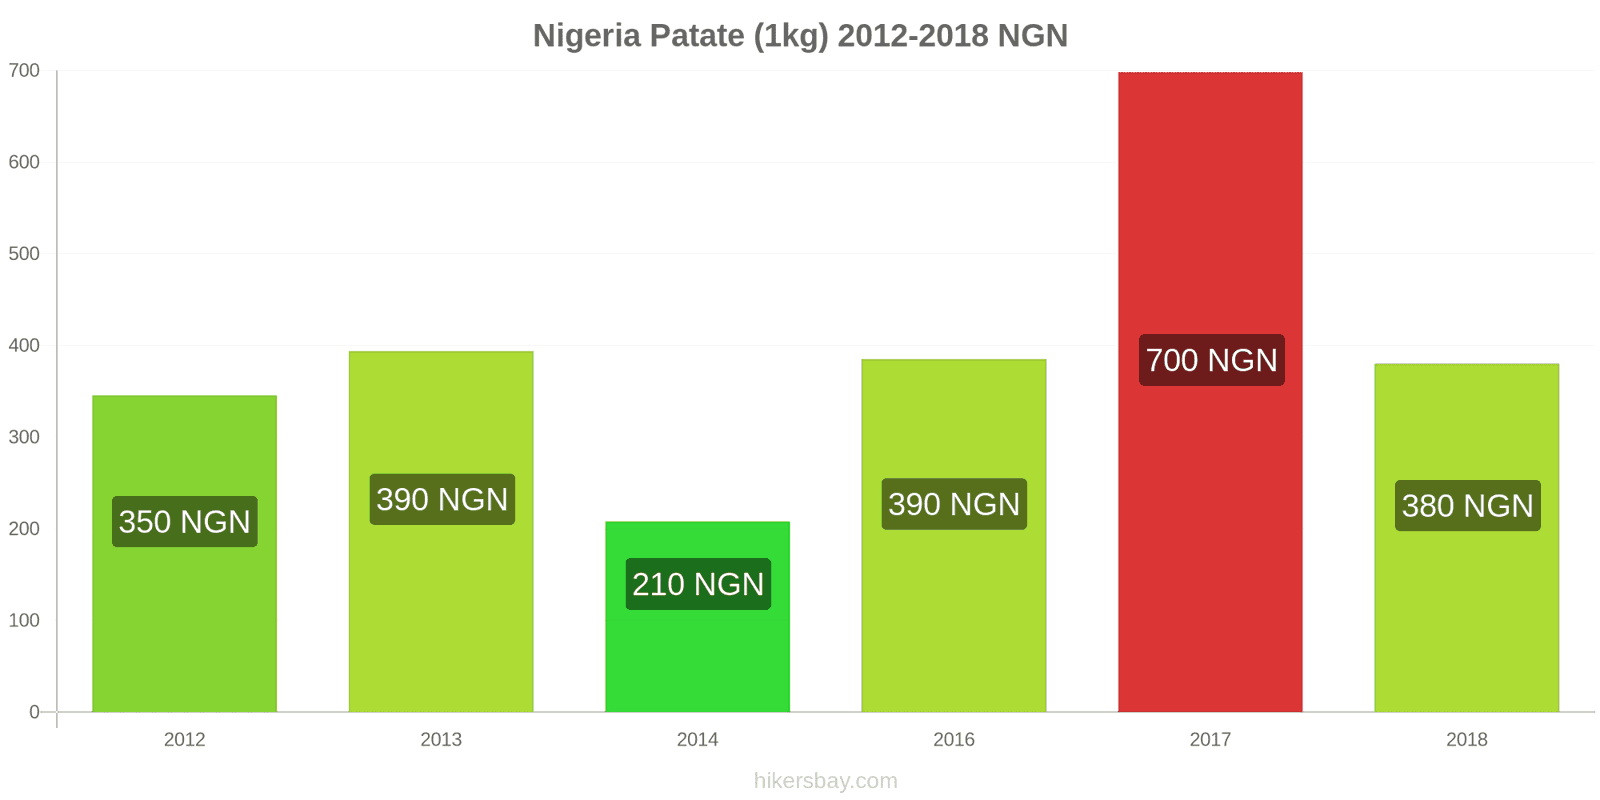 Nigeria cambi di prezzo Patate (1kg) hikersbay.com